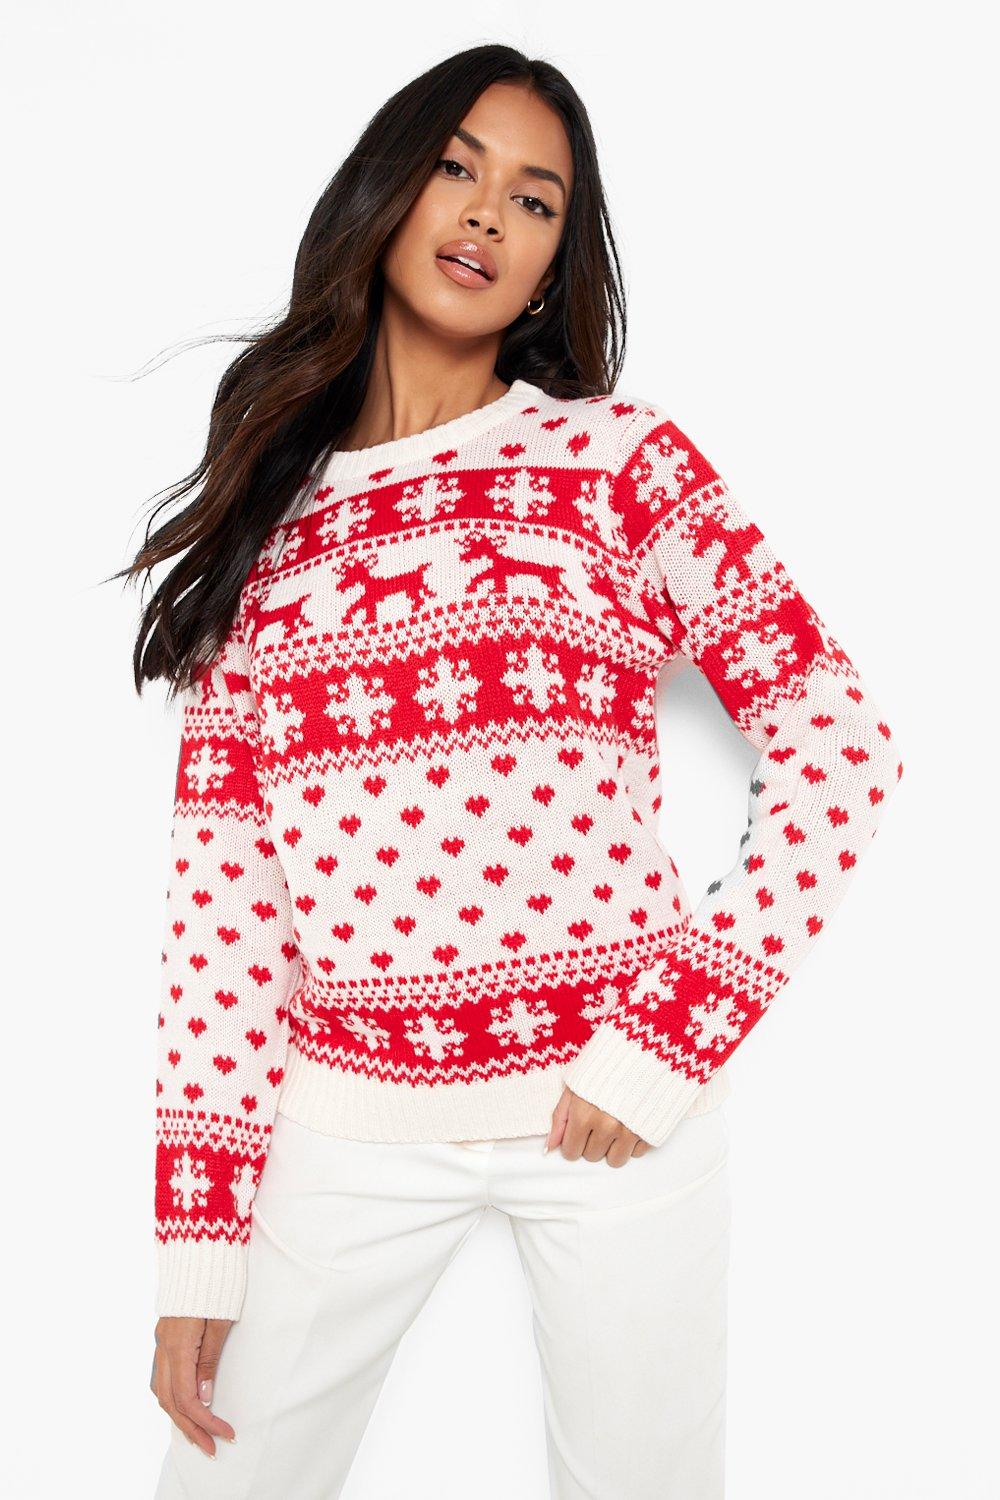 NWT Camii Mia Women's Holiday Sweater Red White Gray Reindeer